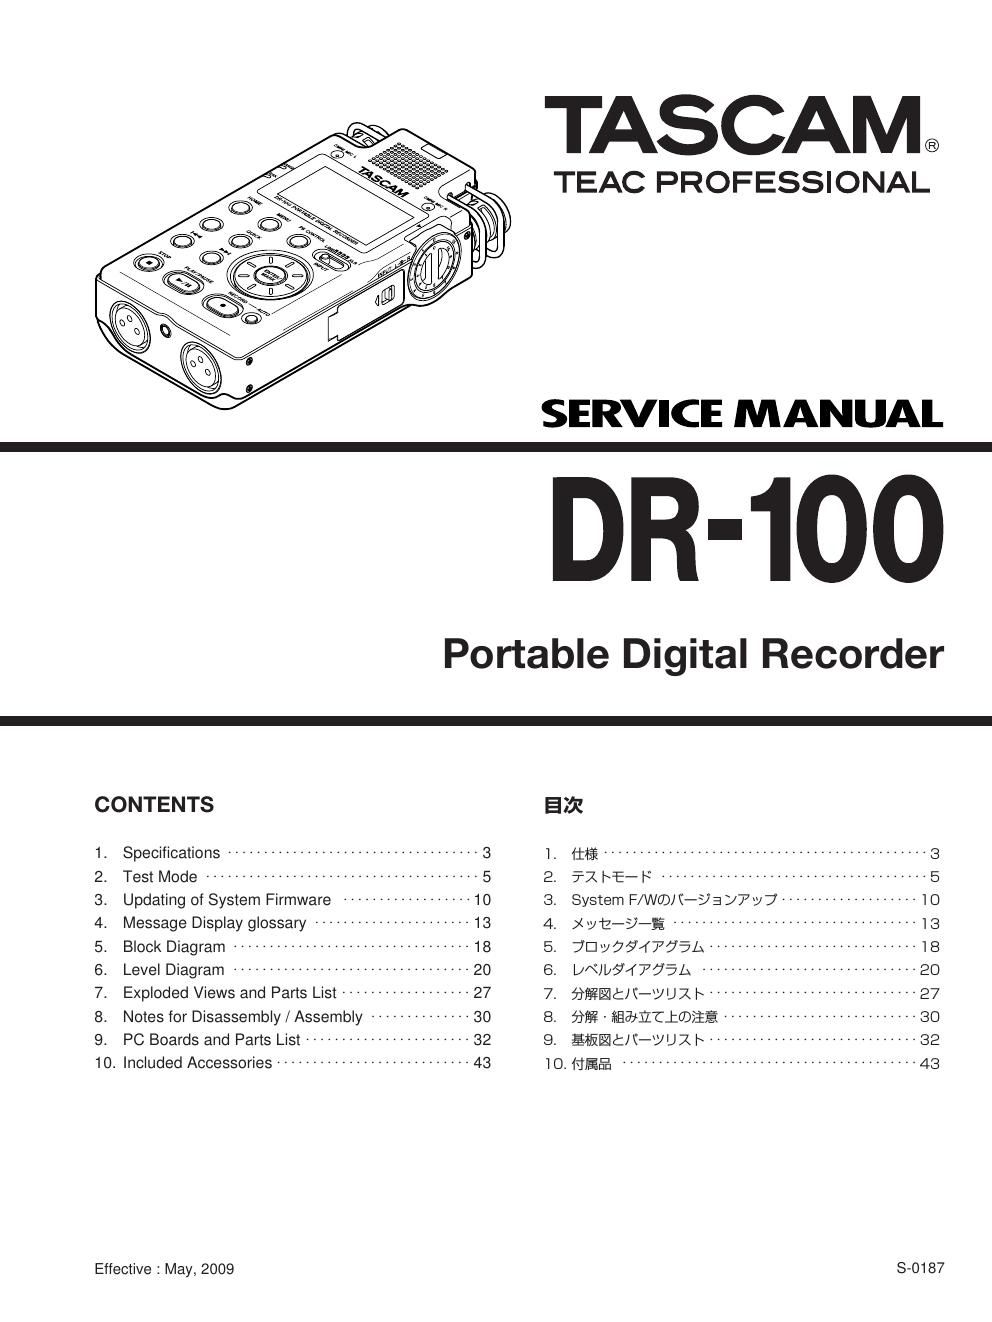 Tascam DR 100 Service Manual